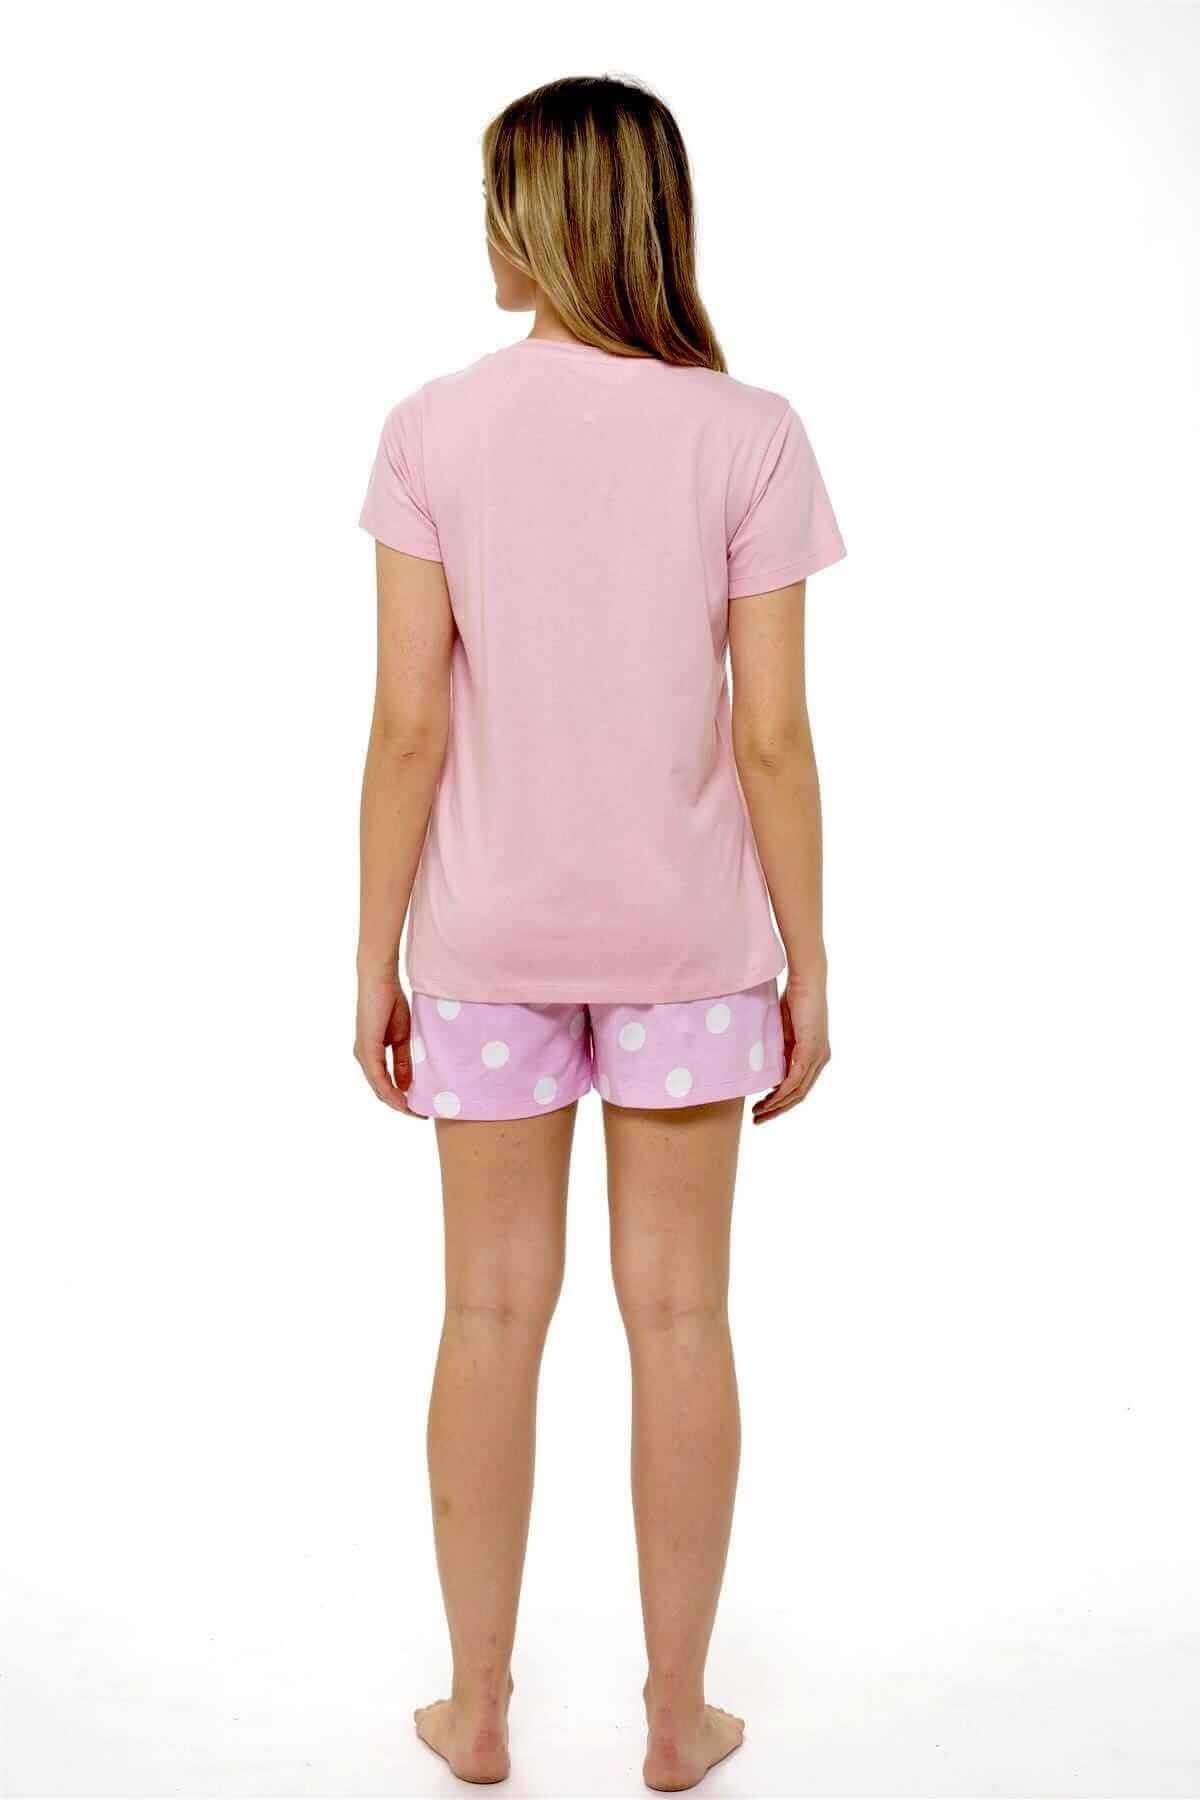 Women's Sausage Dog T Shirt & Shorts Cotton Pyjama Set. Buy now for £10.00. A Pyjamas by Daisy Dreamer. 12-14, 16-18, 20-22, 8-10, animal, bachelorette, bridesmaid, cotton, dog, embroidery, gym, hotel, jersey, ladies, loungewear, nightwear, pink, pom pom,